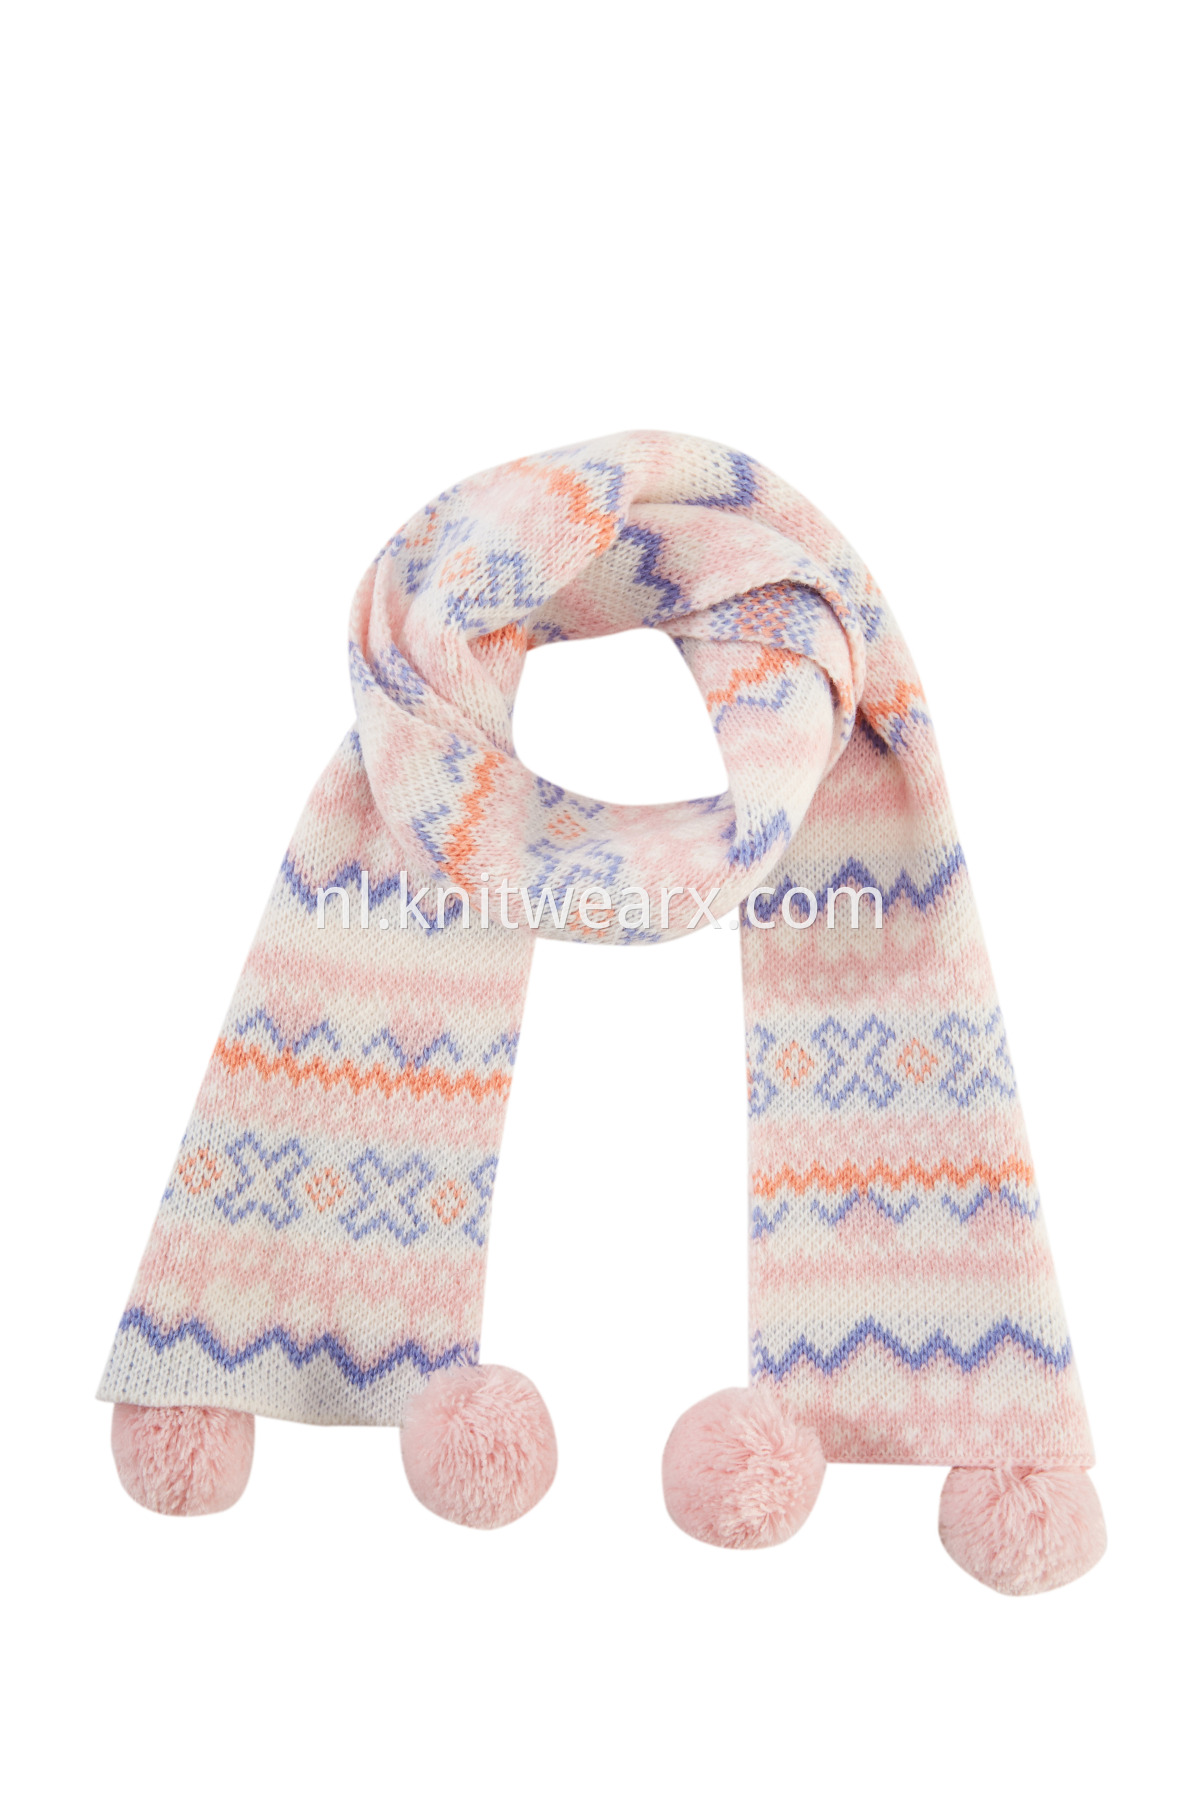 Girls's Sweet Winter Warm Jacquard Knit Christmas Scarves Pompom